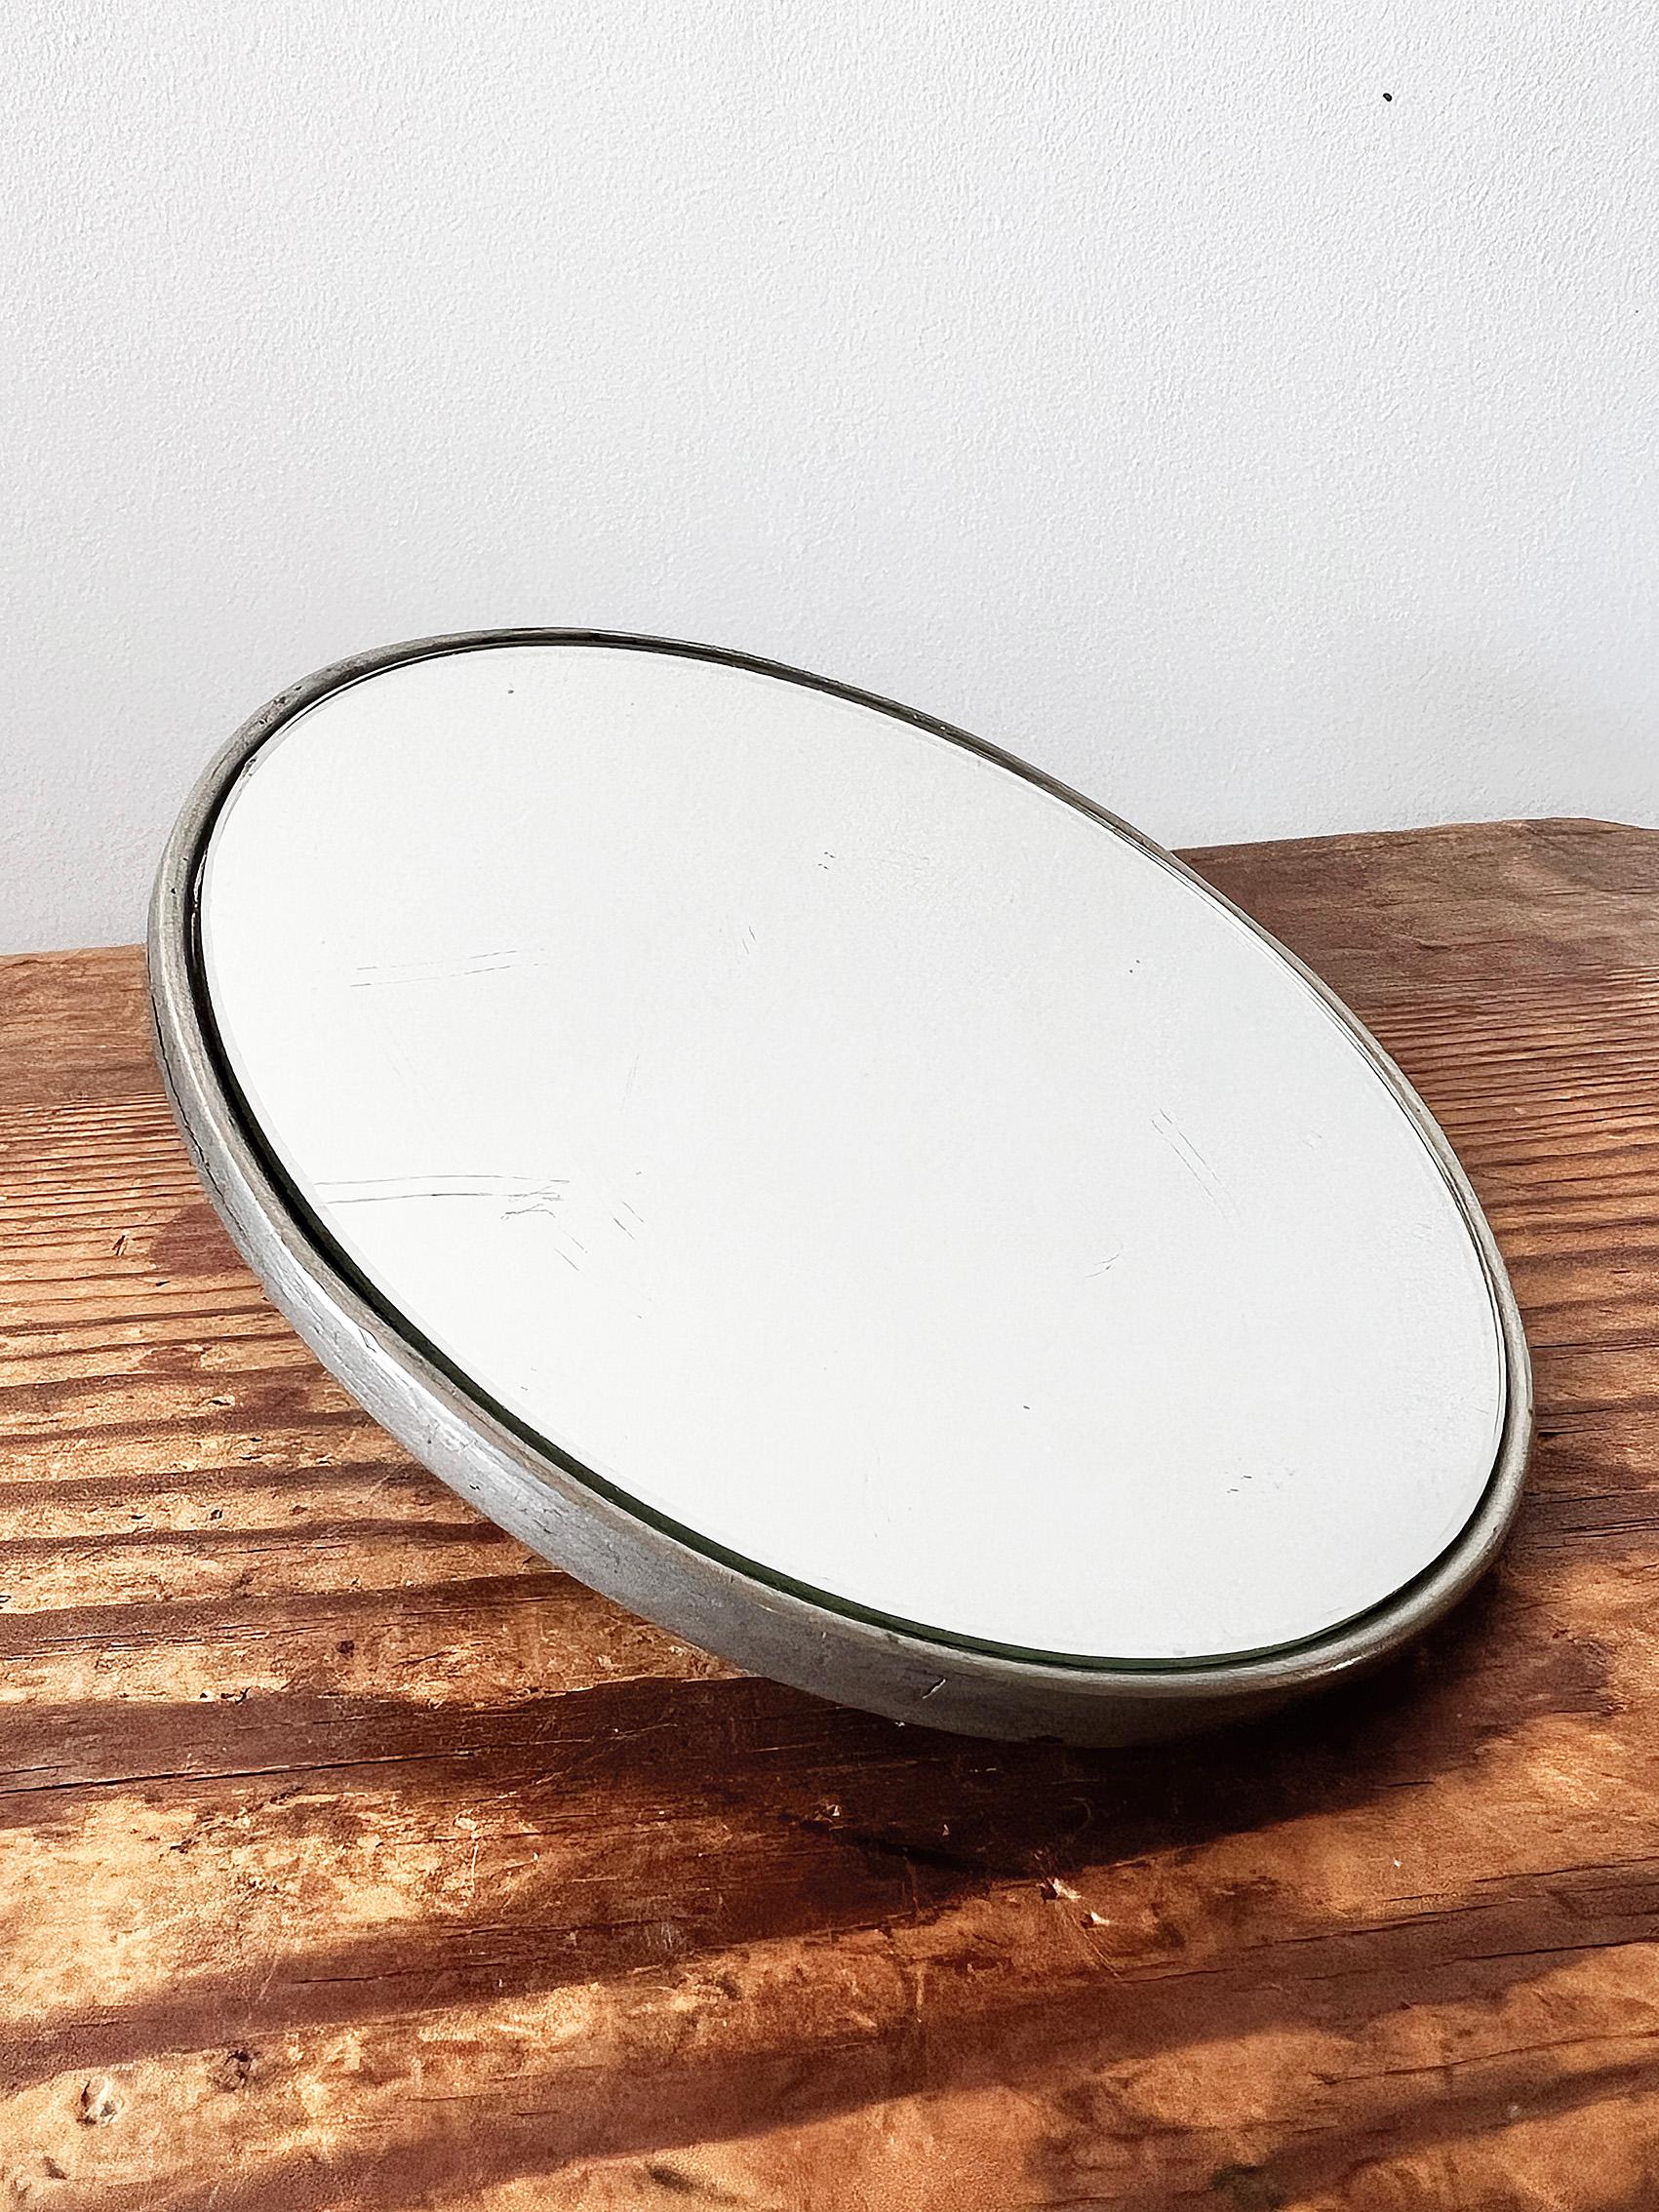 Mid-20th Century Scandinavian Modern Pewter Vanity Mirror, Sweden Ca 1930 - 1940's For Sale